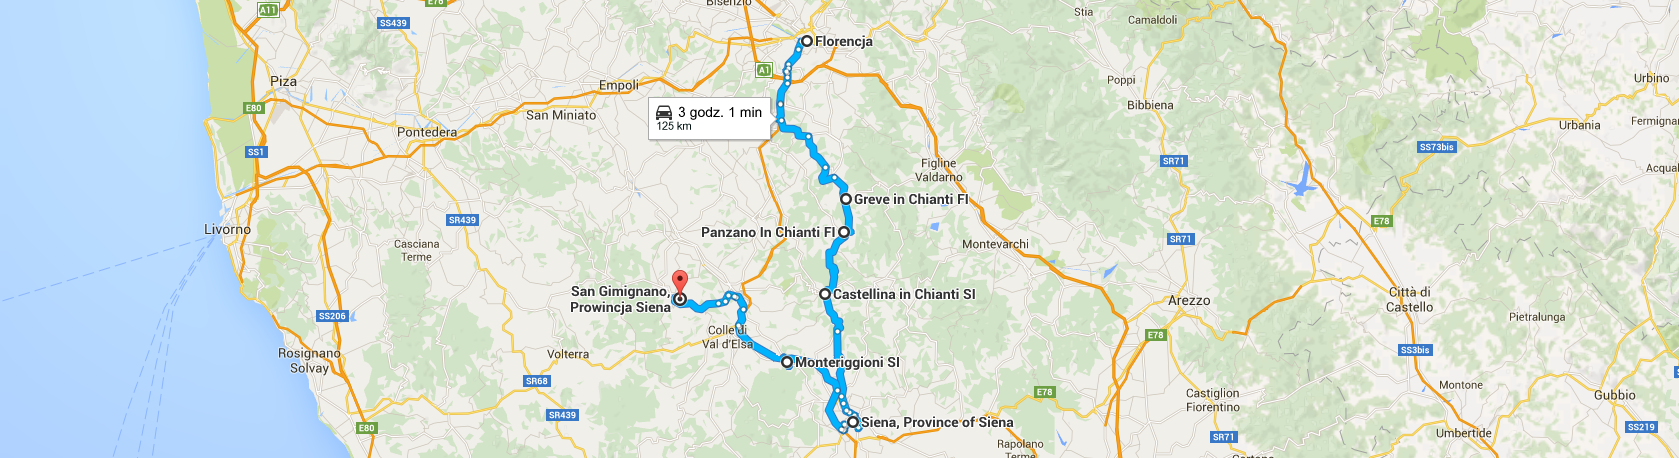 Trasa z Florencji do San Gimignano